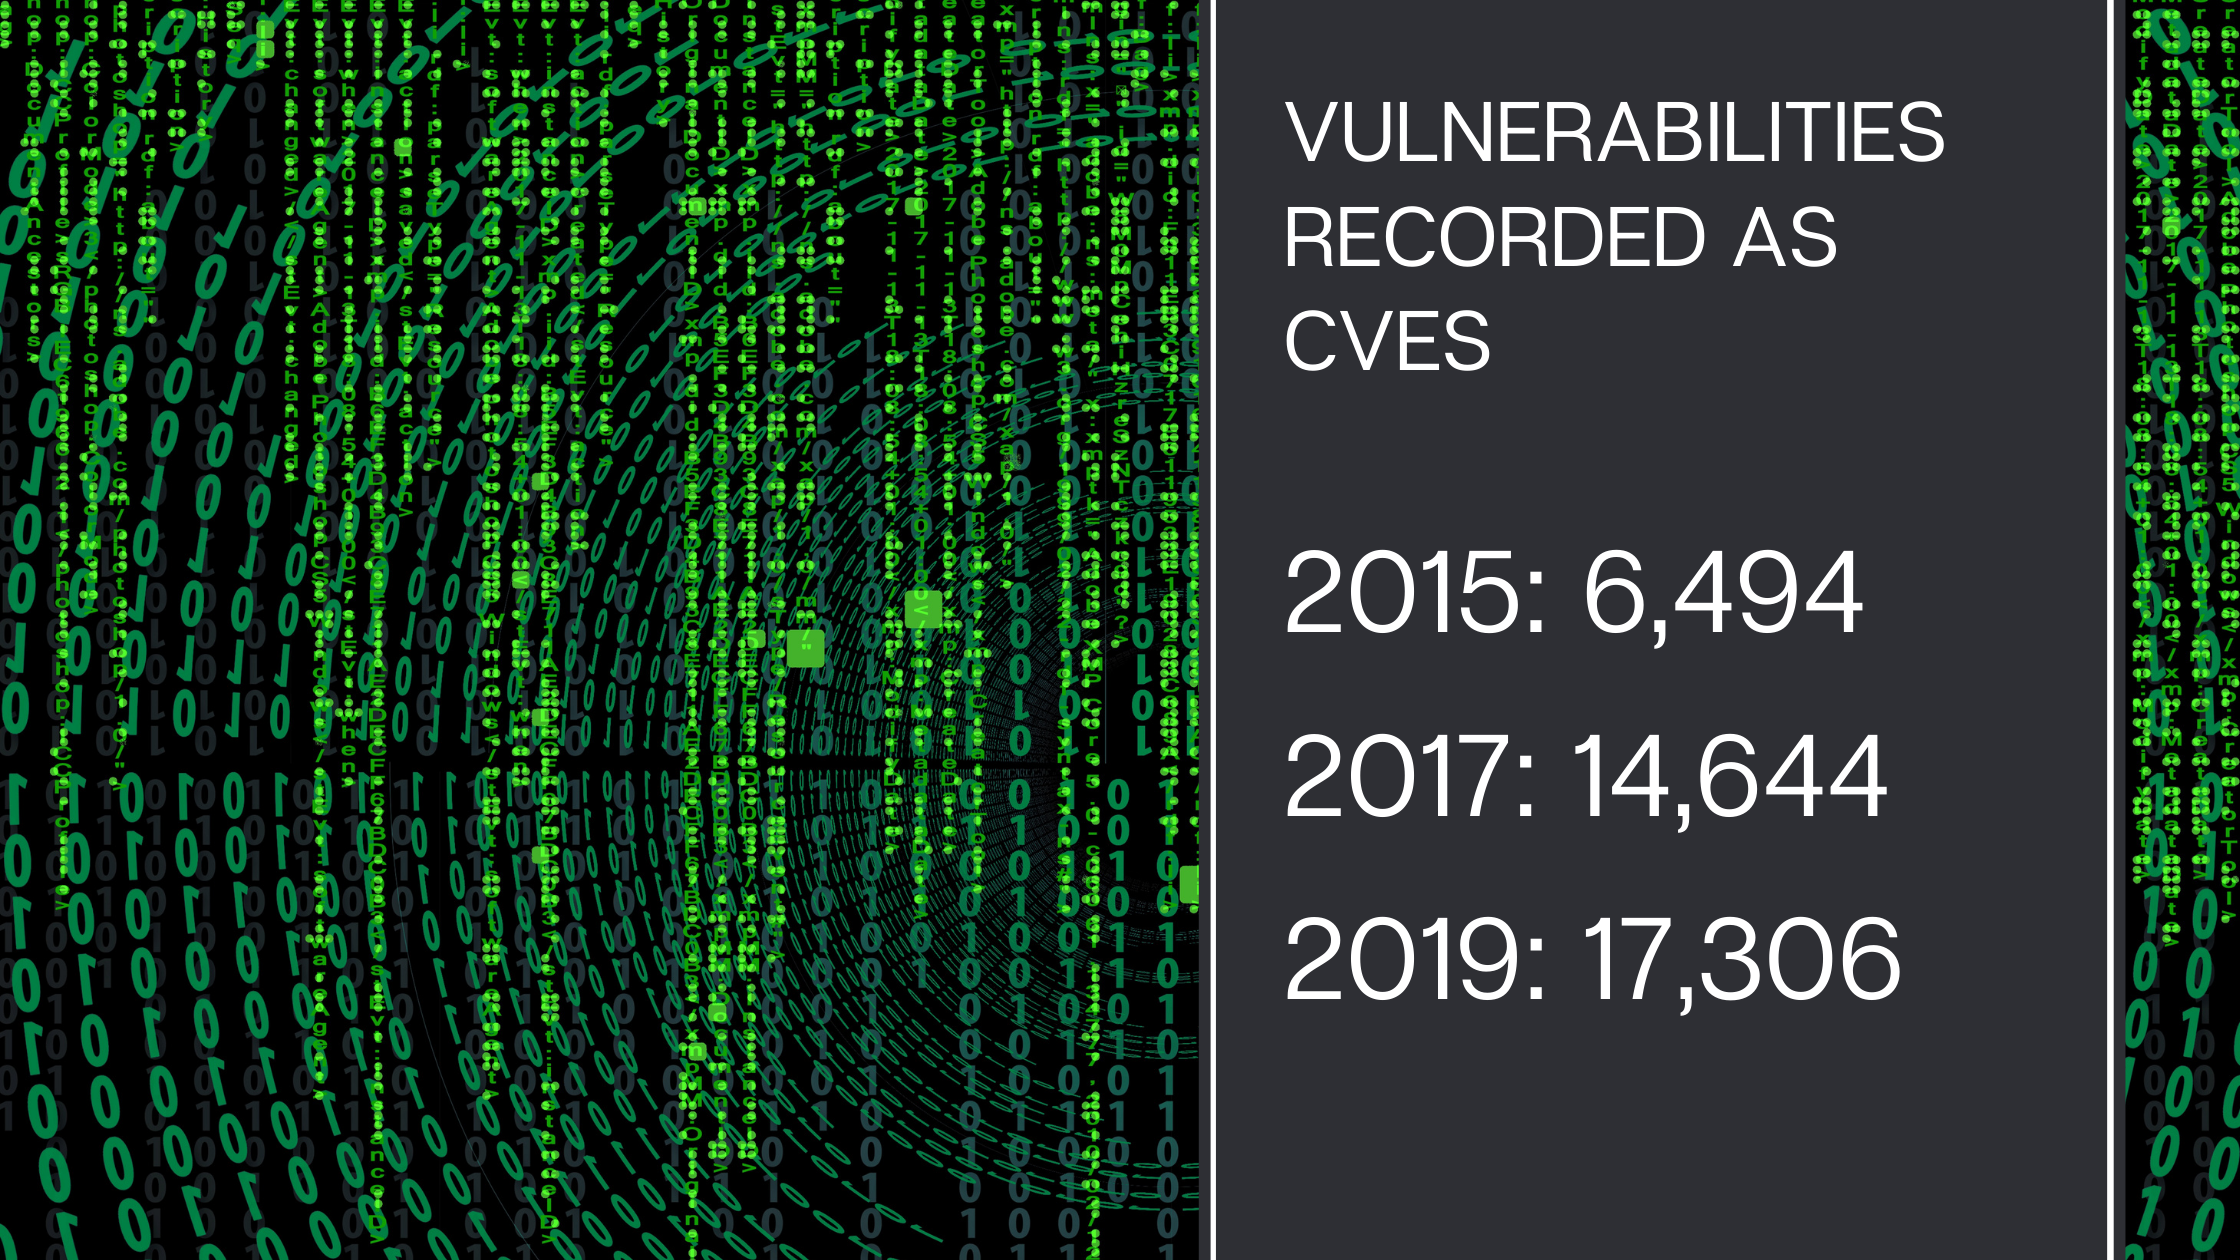 Growth of CVE vulnerabilities